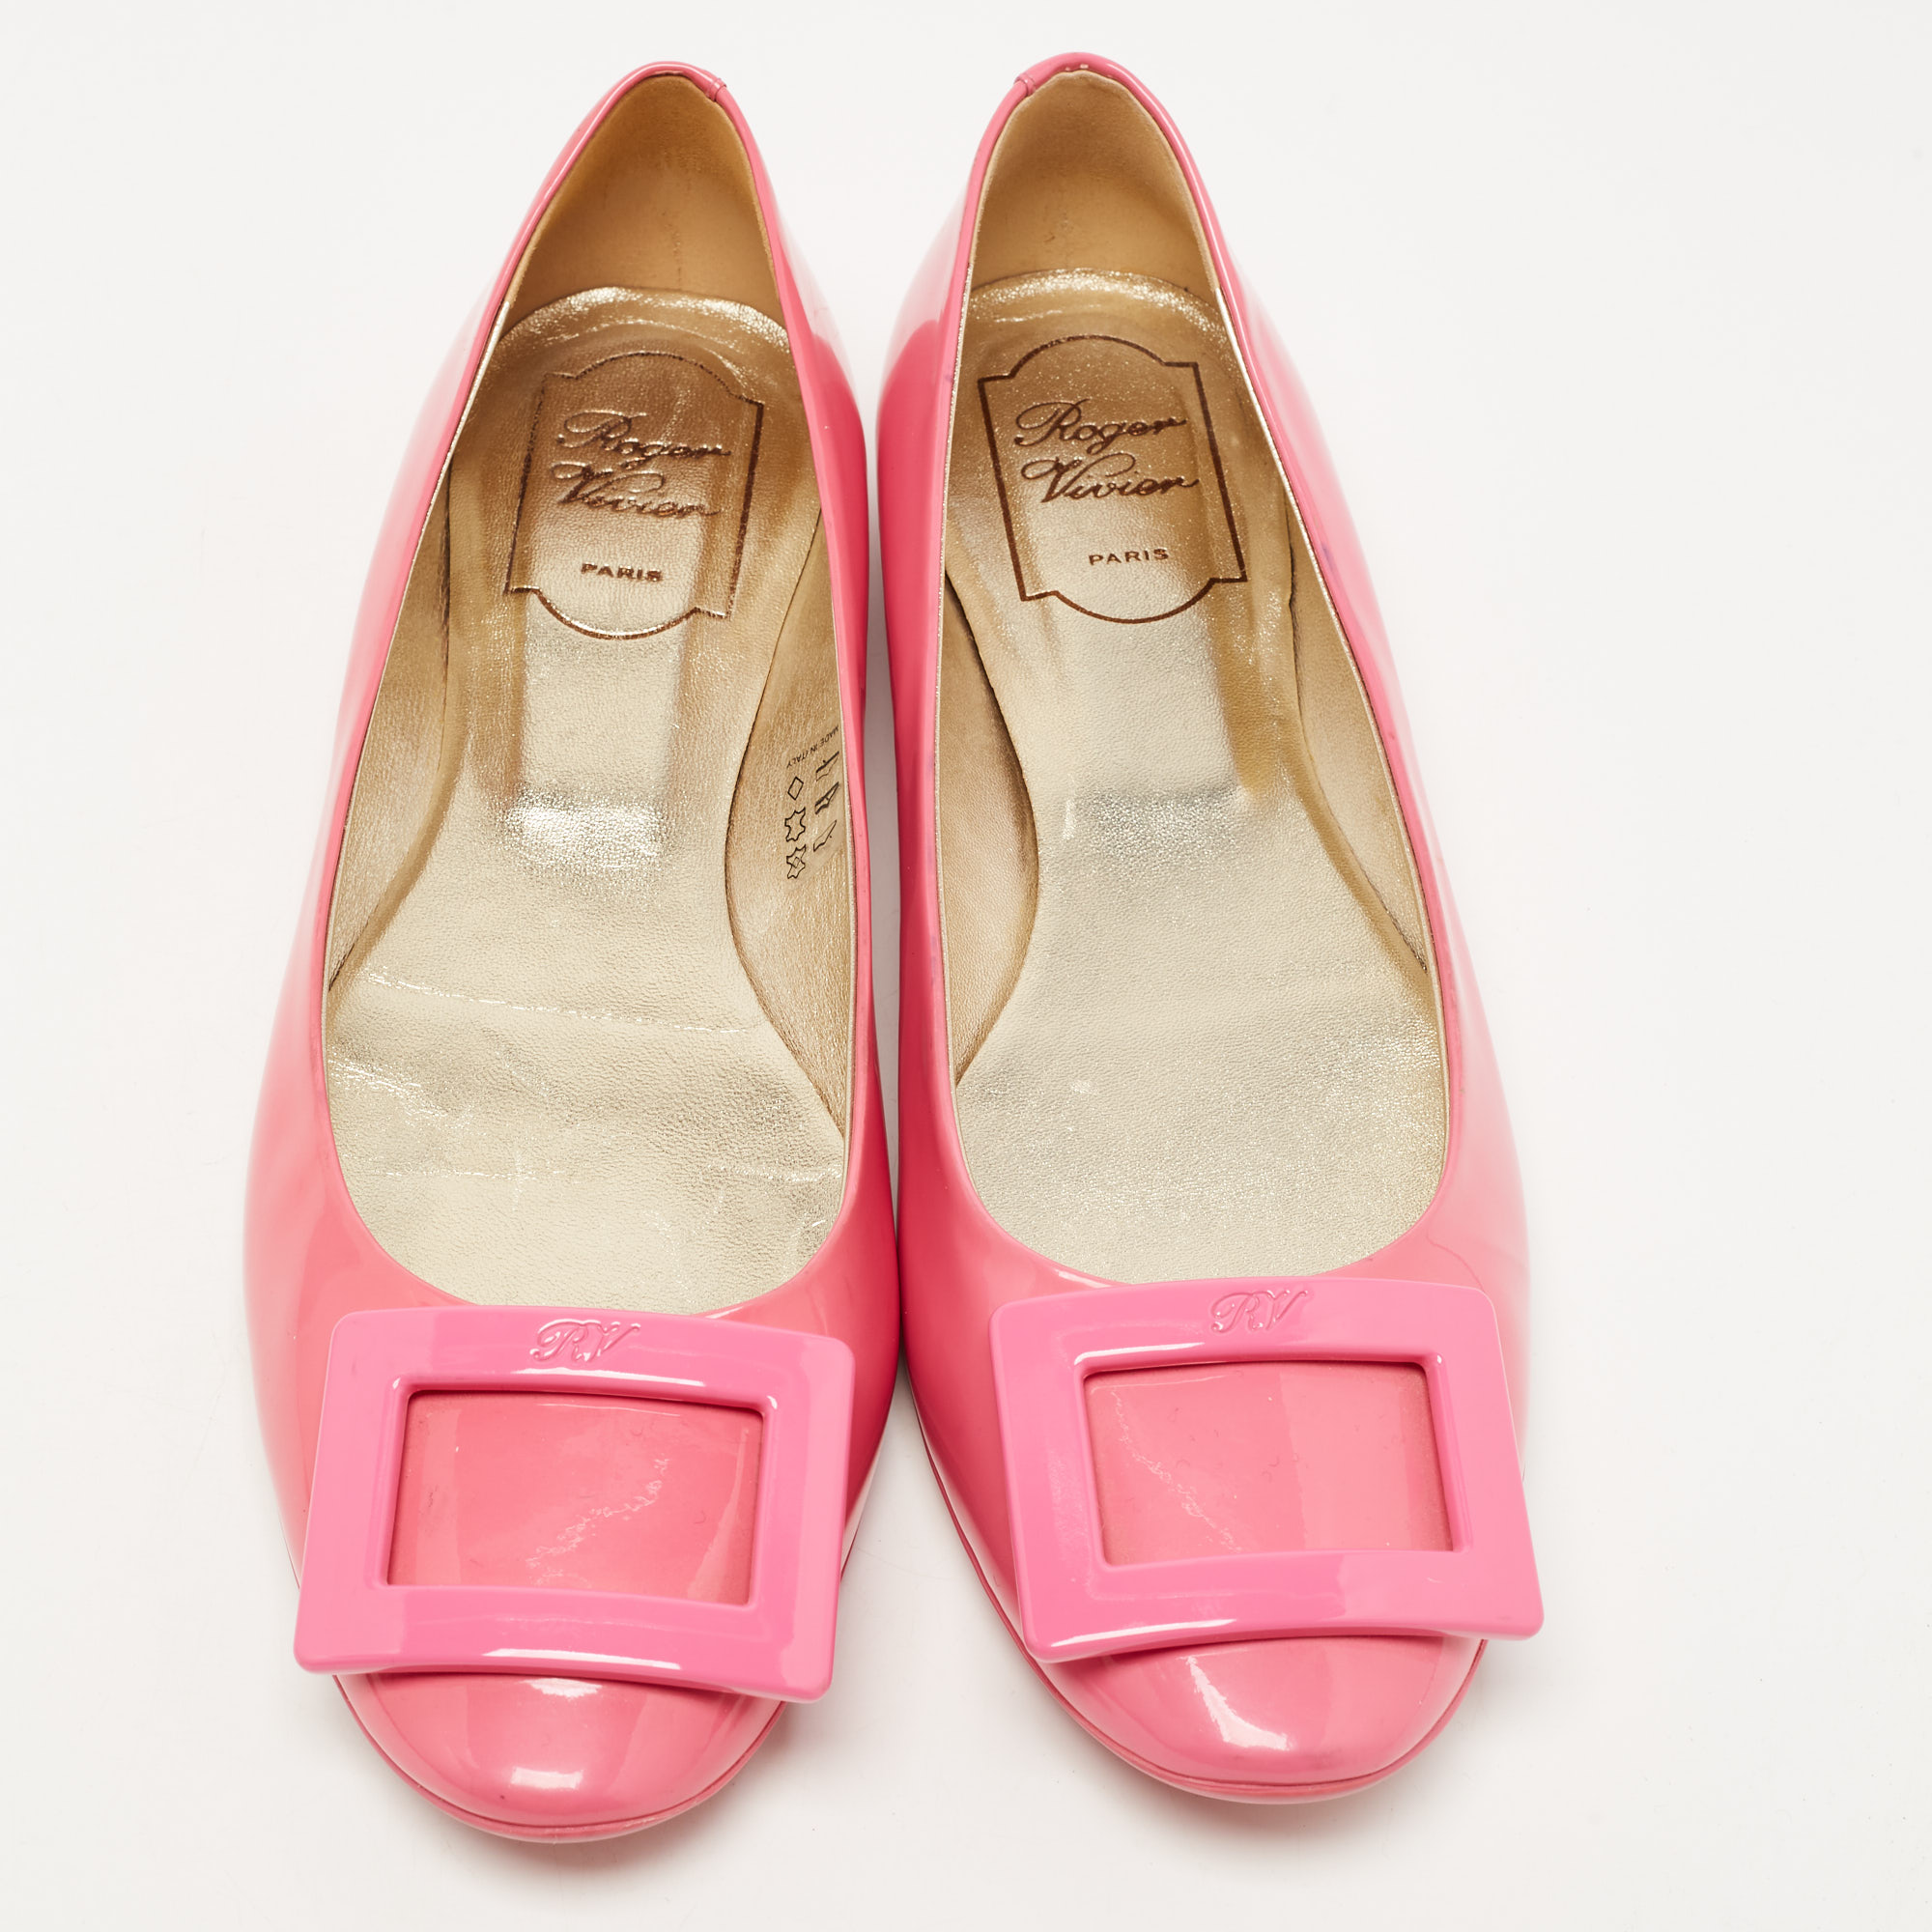 Roger Vivier Pink Patent Leather Gommette Ballet Flats Size 39.5